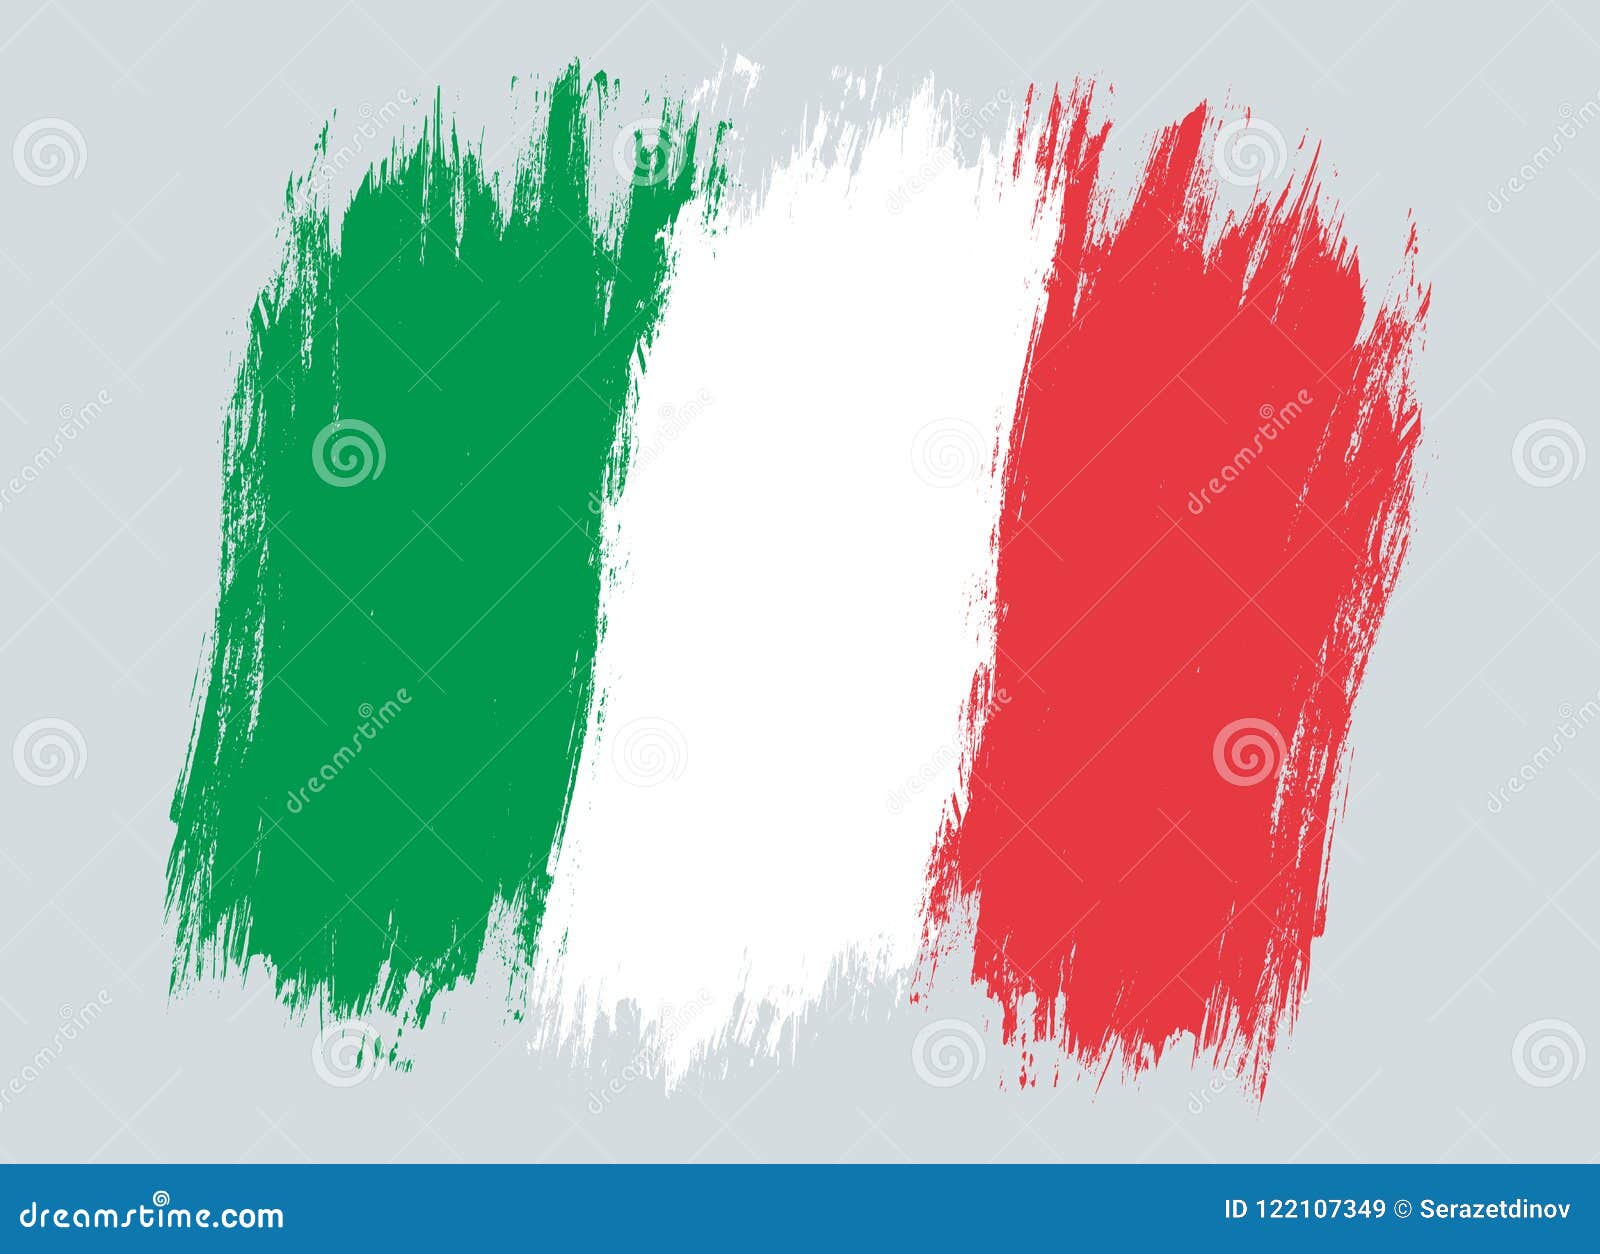 Italie Drapeau Symbole Italien Ruban PNG , Bouton, Marque, Art PNG